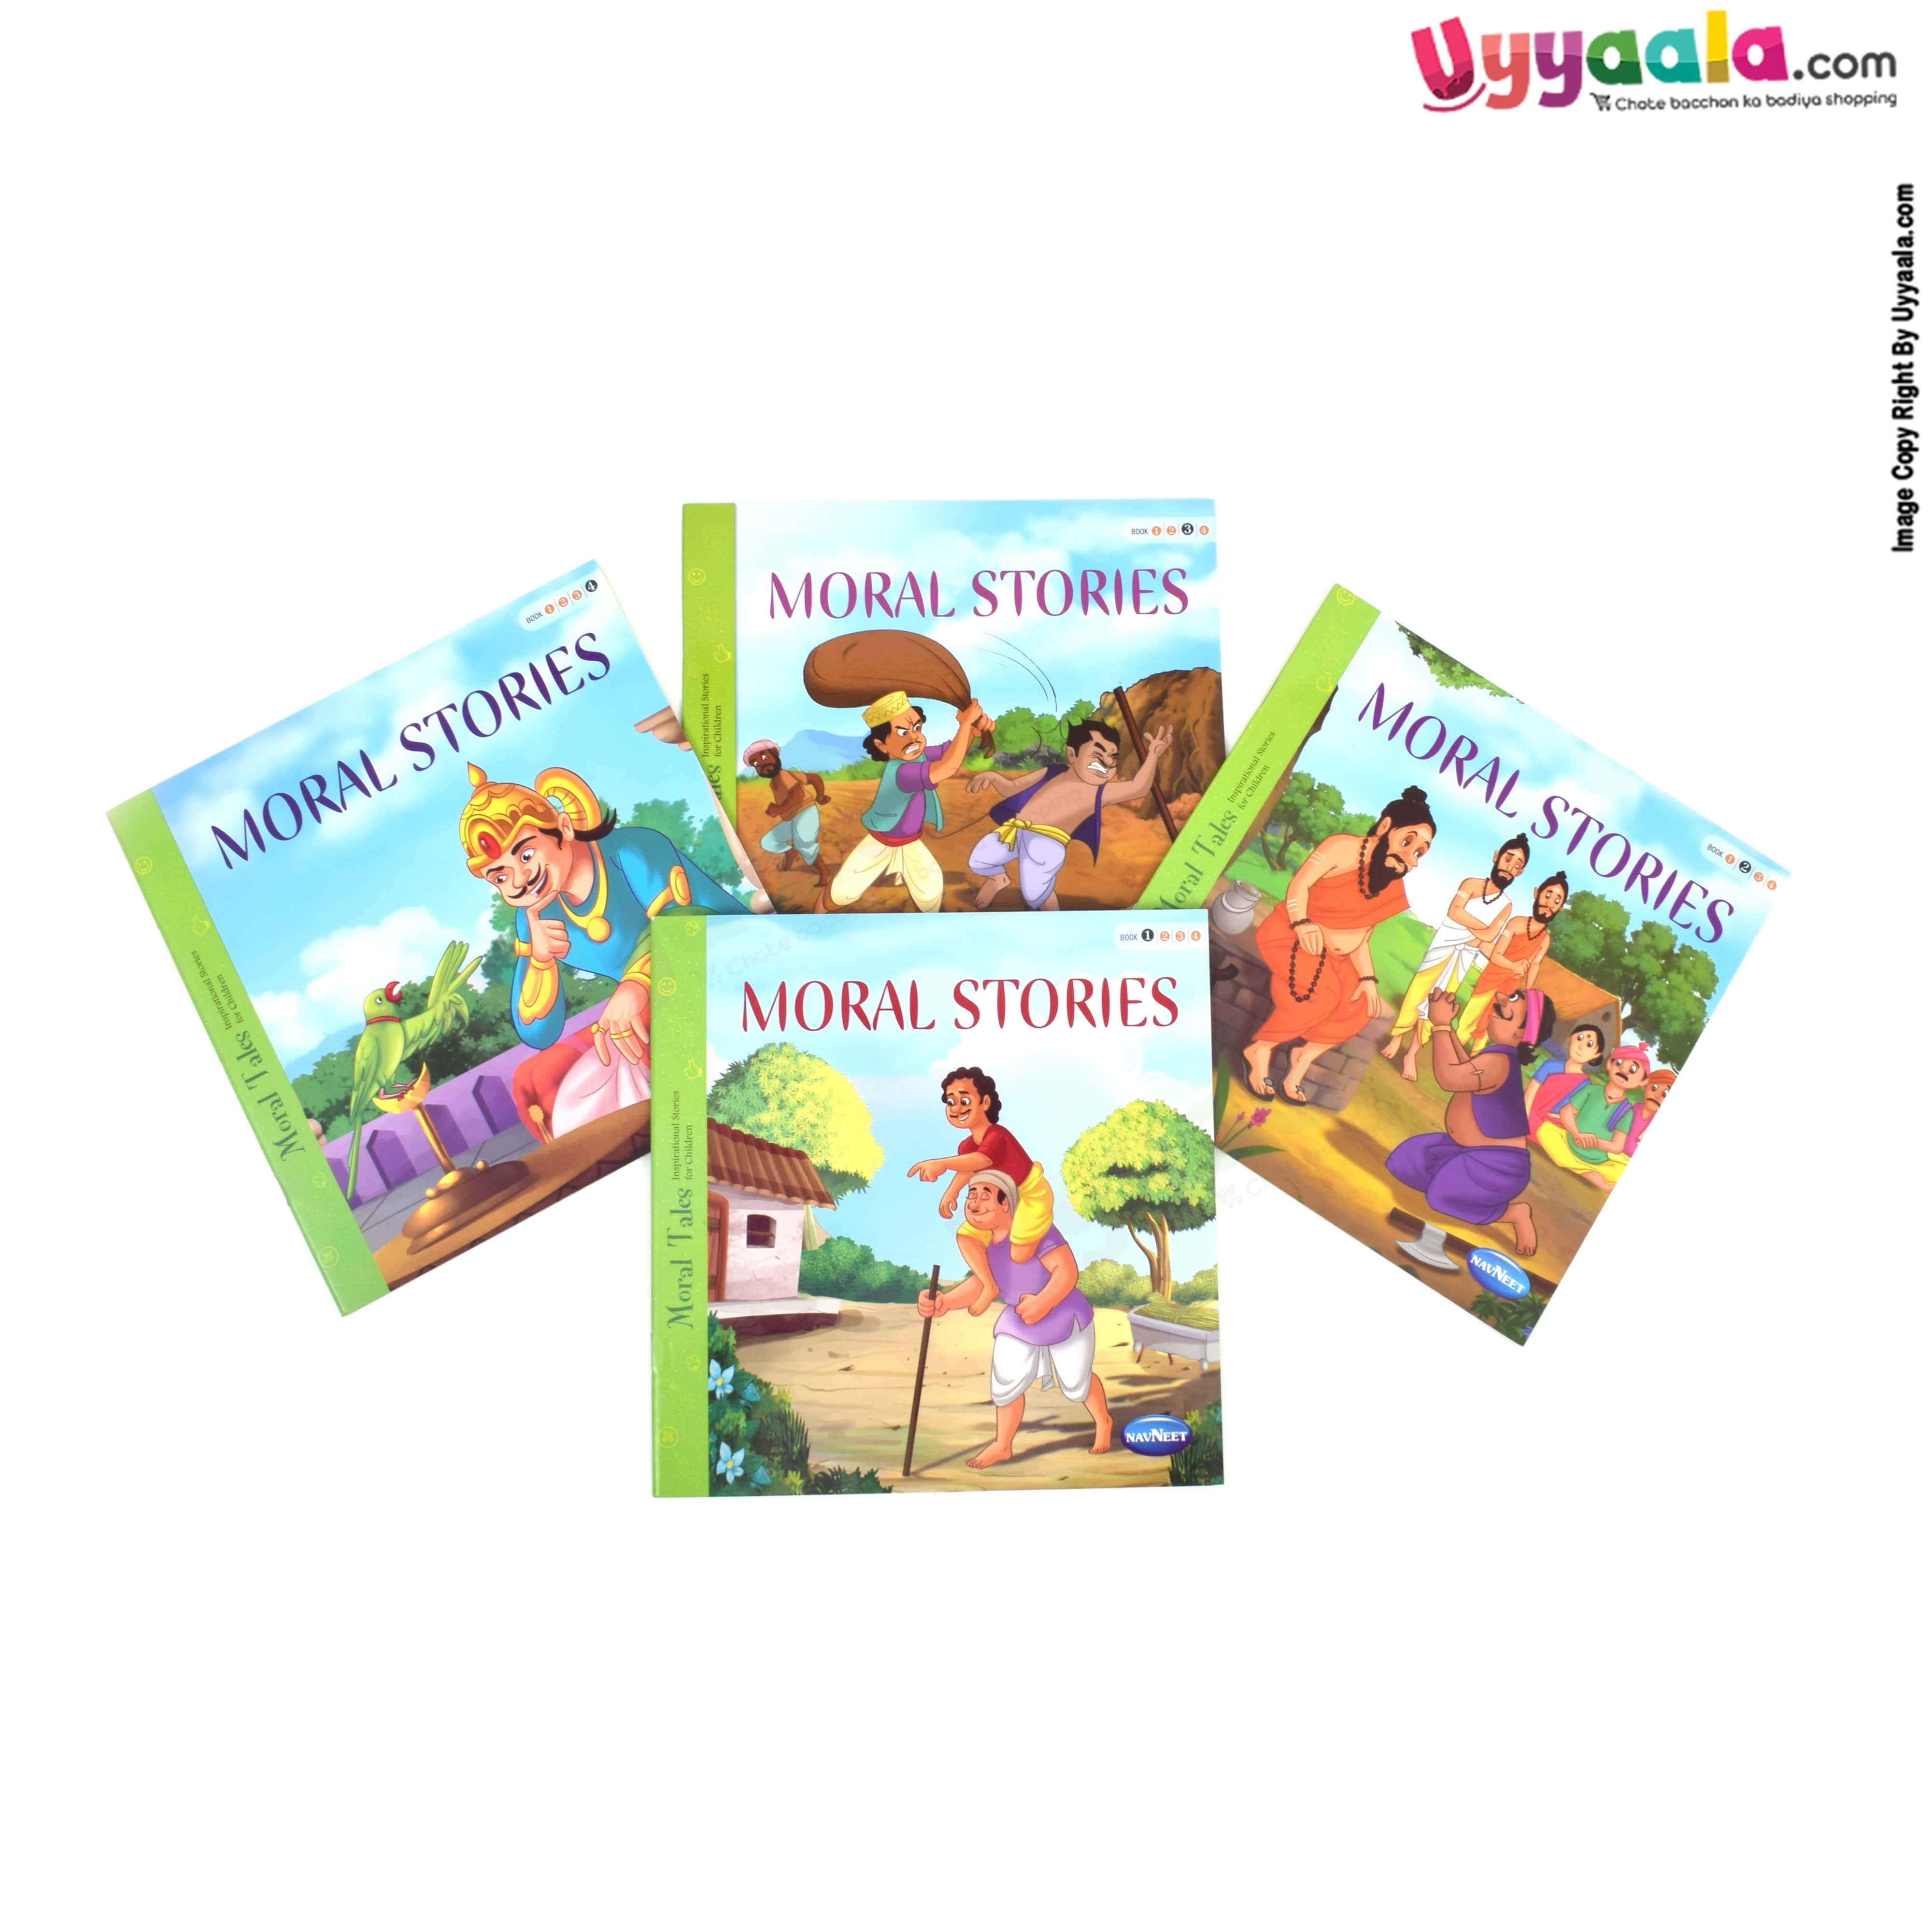 NAVNEET moral tales inspirational stories for children, moral stories pack of 4 -4 volumes